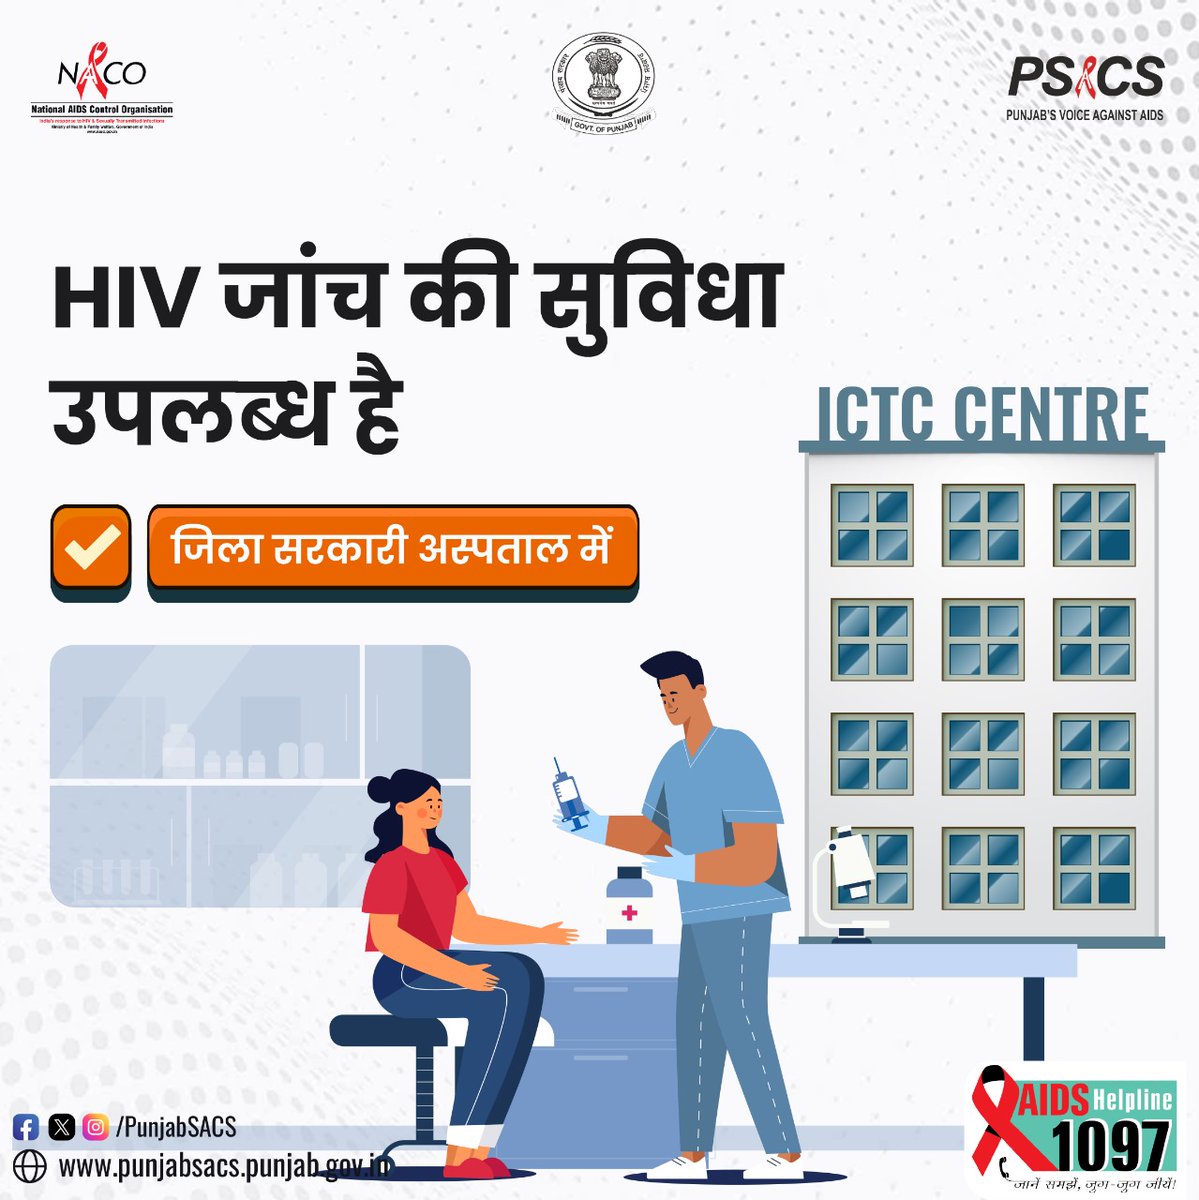 HIV जांच की सुविधा जिला सरकारी अस्पताल में उपलब्ध है !

#HIVTesting #GetTested #KnowYourHIVStatus #Dial1097 #KnowAIDS #HIVTestingisImportant #KnowHIV #HIVFreeIndia #CorrectInformation #NACOINDIA #NACO